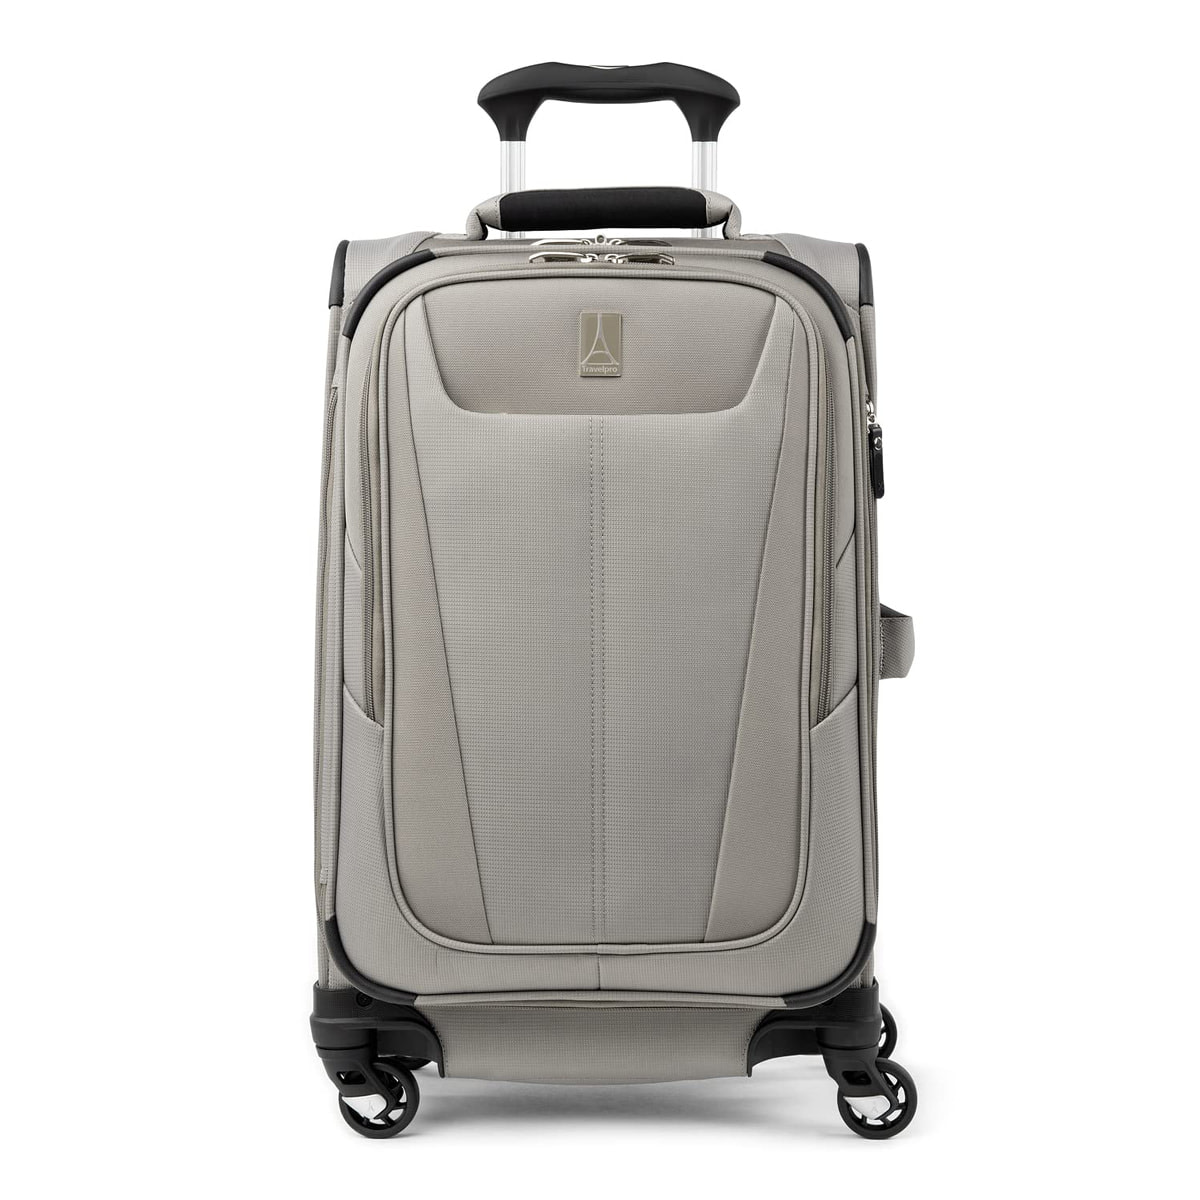 Lightweight softside carry-on luggage